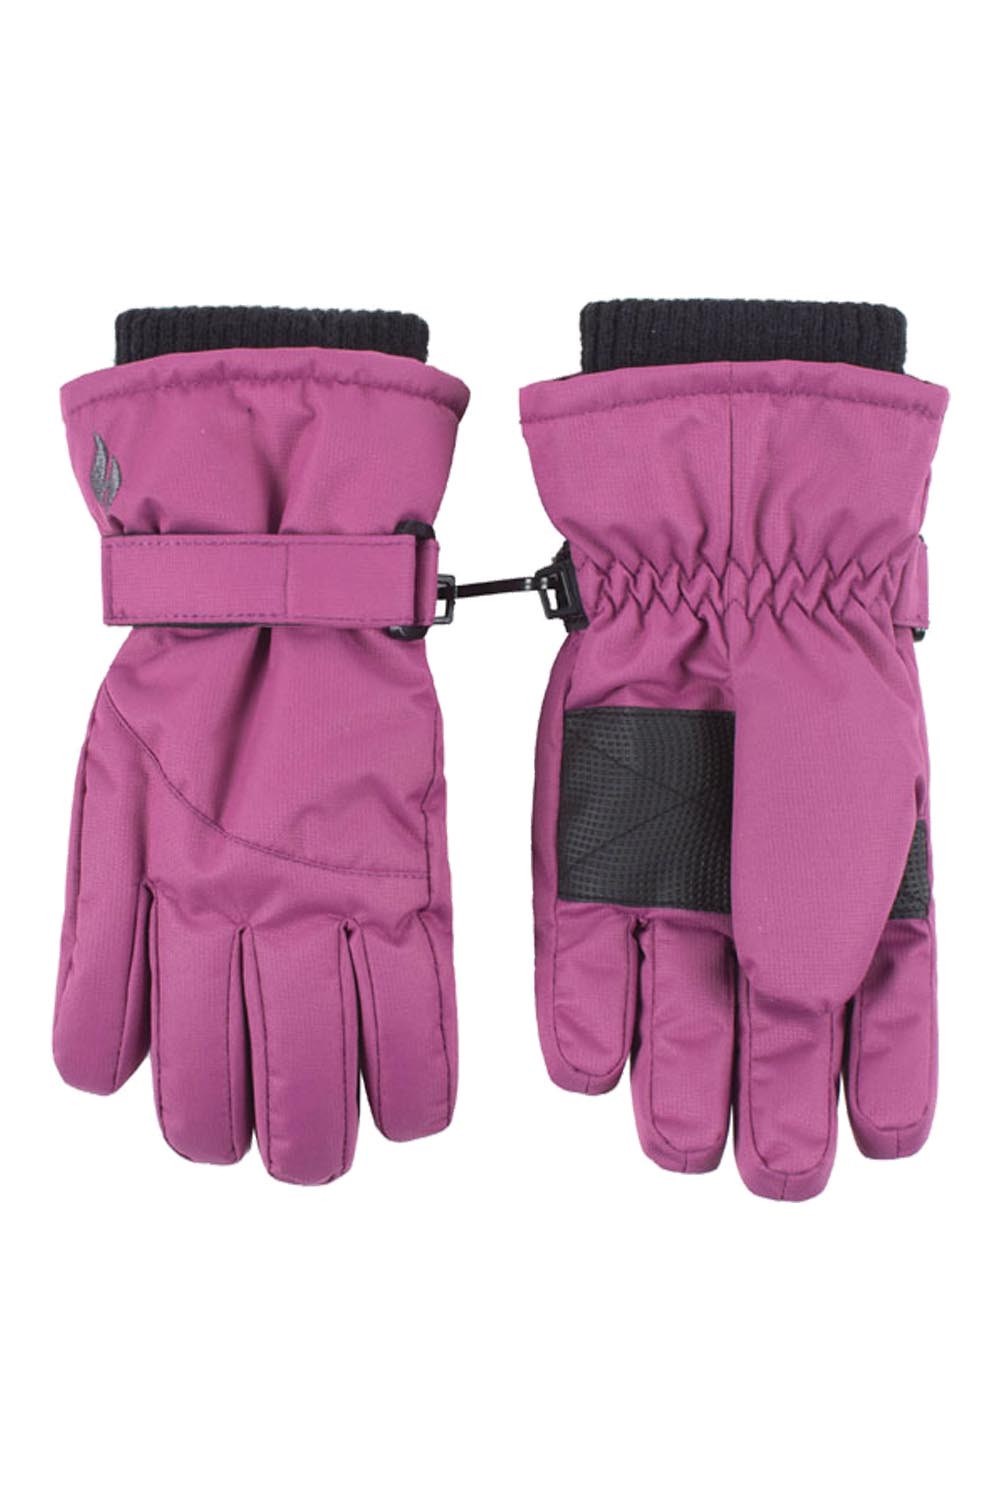 Girls Winter Fleece Lined Thermal Ski Snow Gloves -